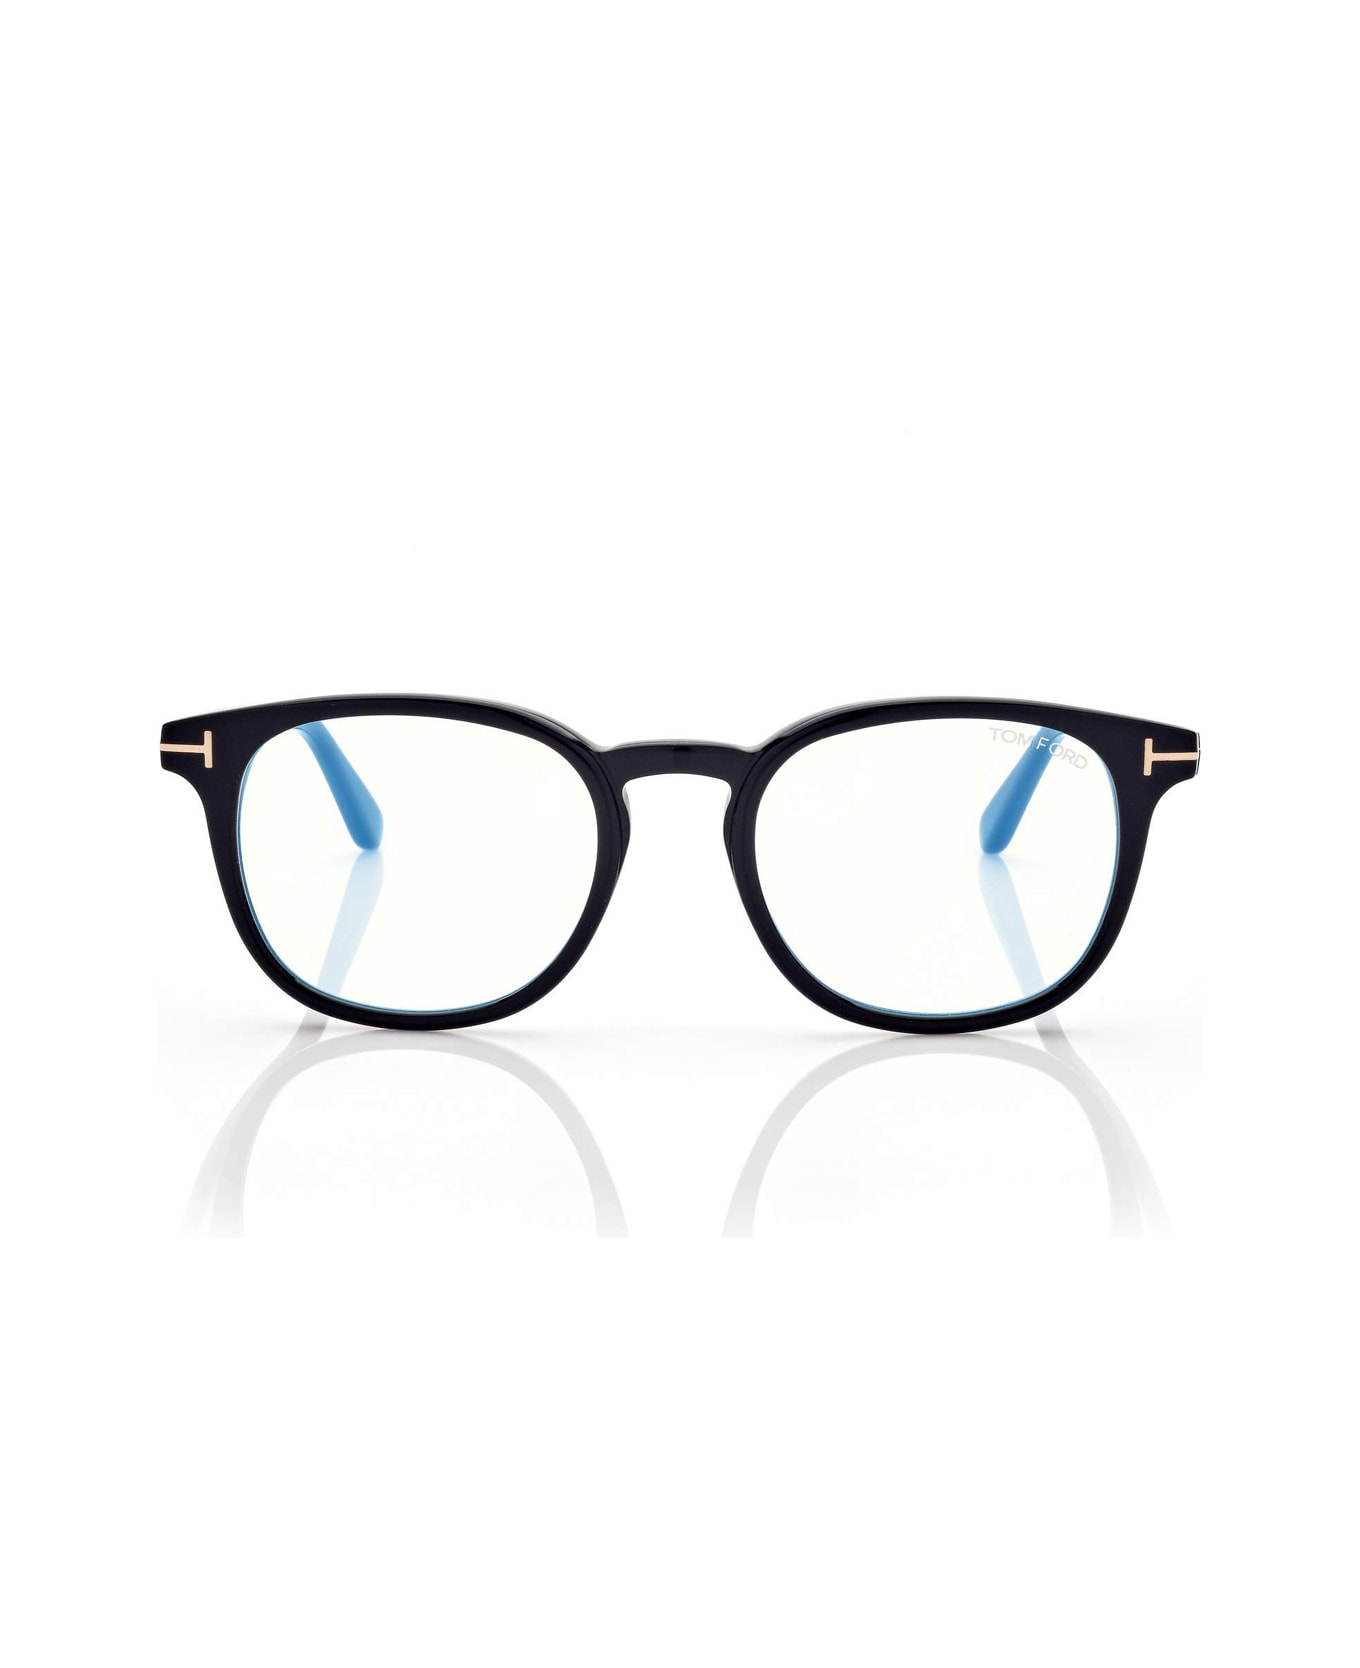 Tom Ford Eyewear Ft5819 Glasses - Nero